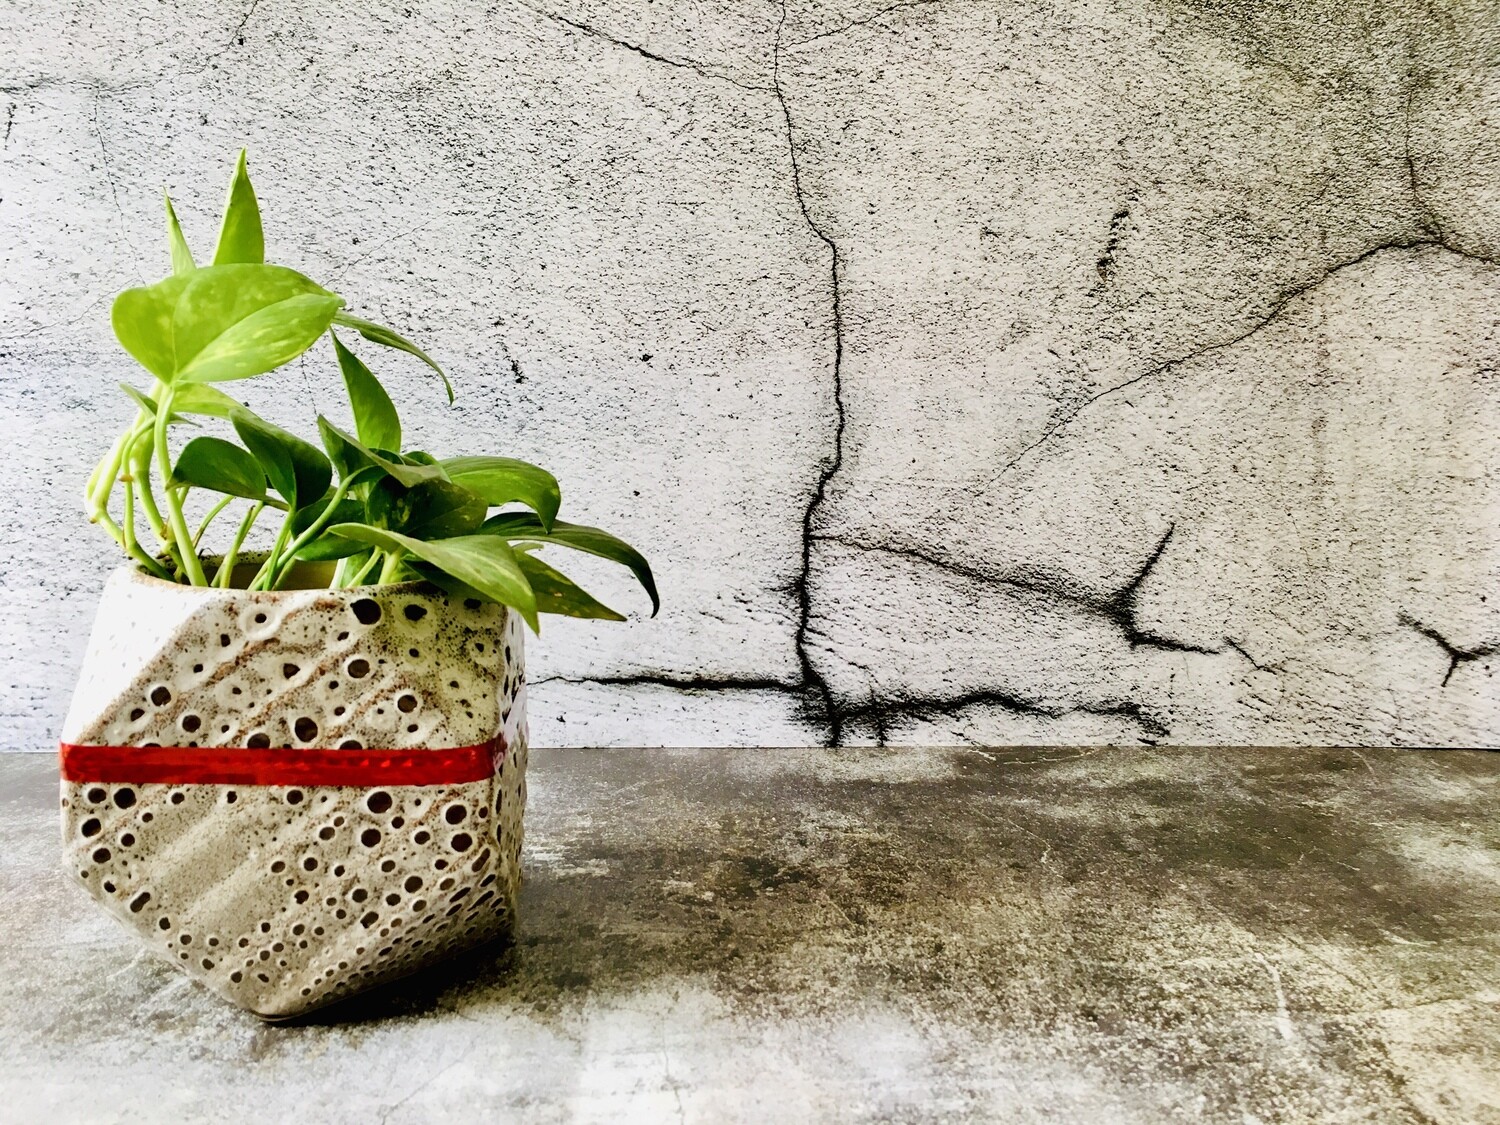 Money Plant Green in 6 Inches Hexa White Pot